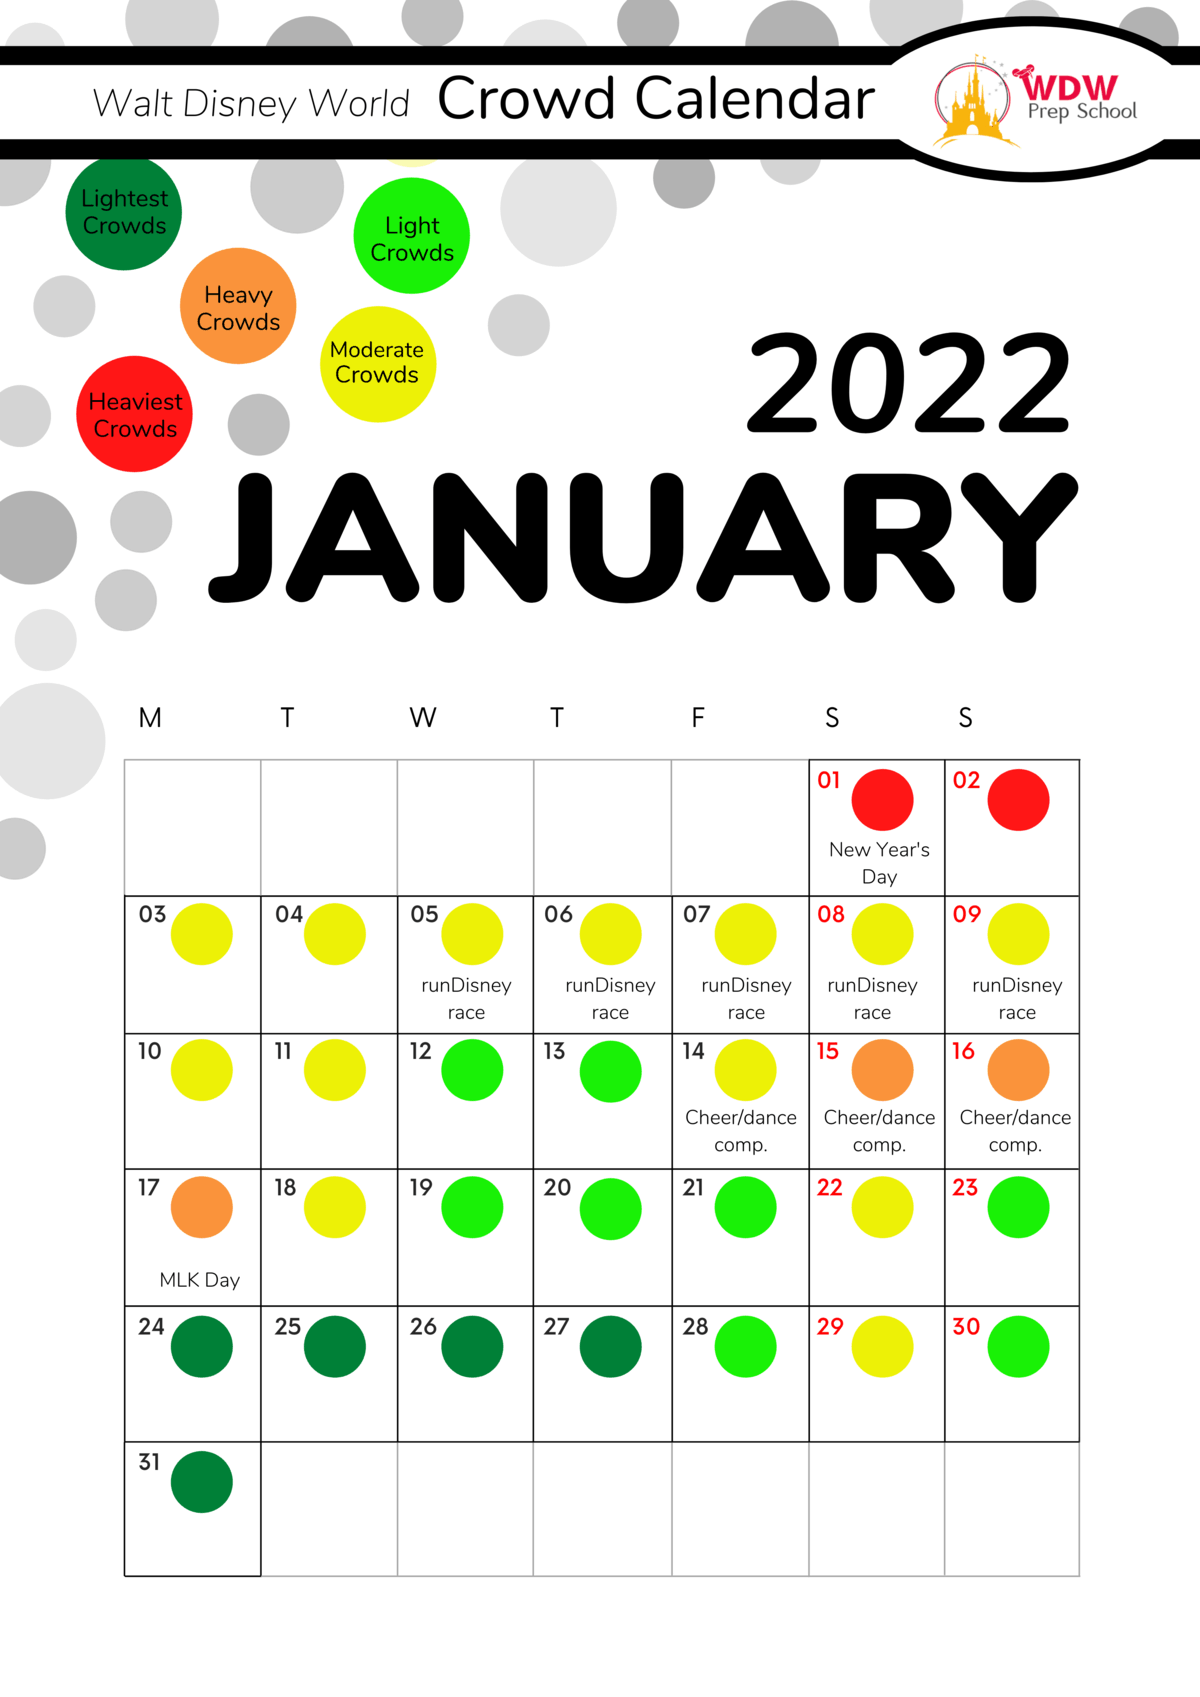 Disney World 2022 Calendar Disney World 2022 Crowd Calendar (Best Times To Go)